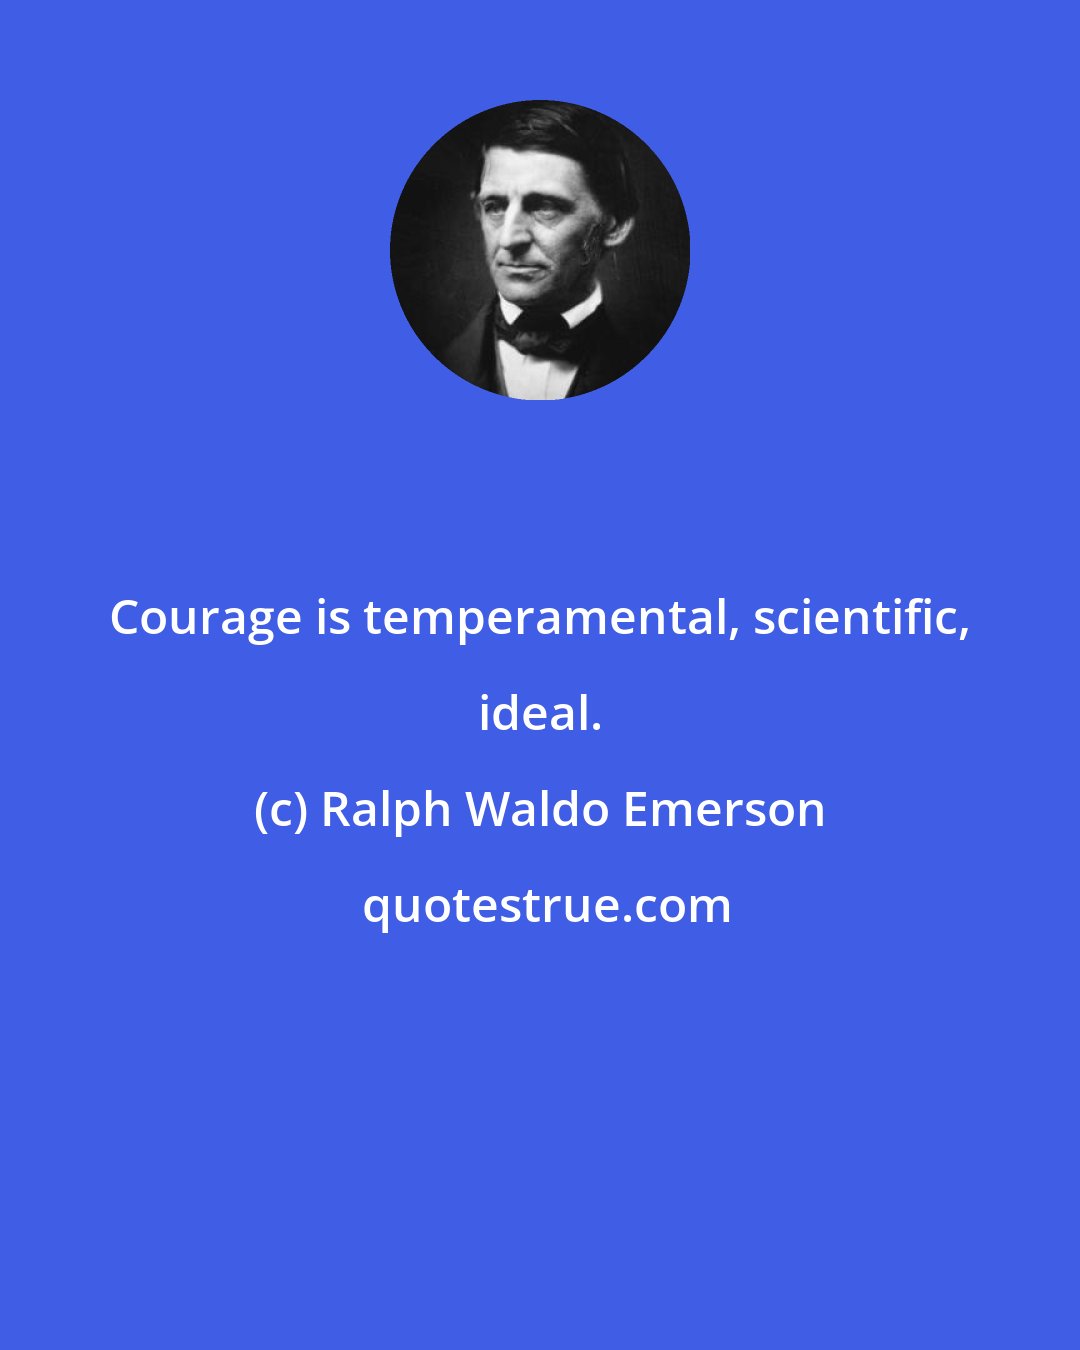 Ralph Waldo Emerson: Courage is temperamental, scientific, ideal.